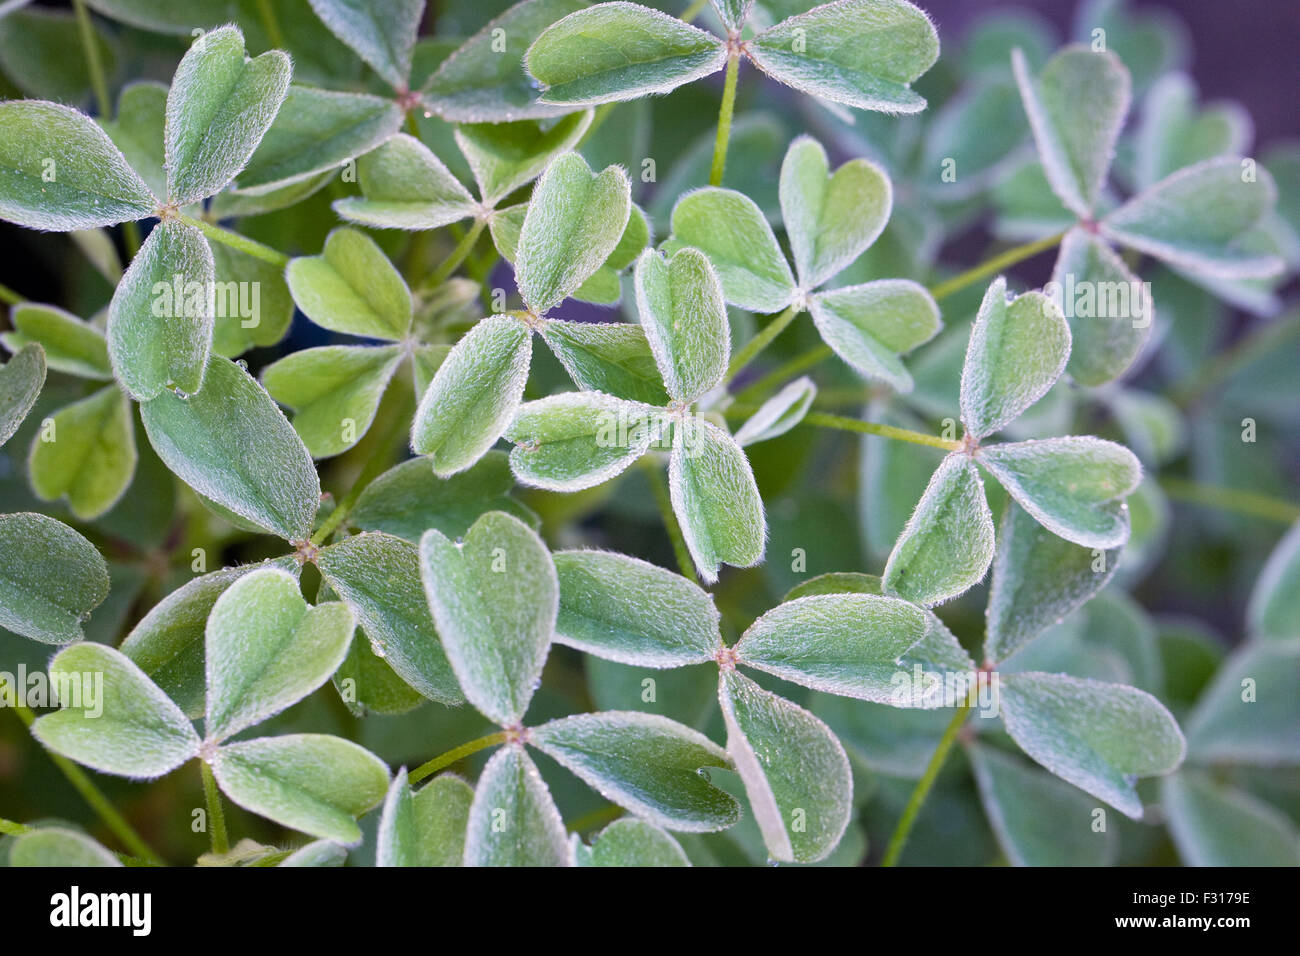 Oxalis Tuberosa Blätter... New Zealand Yam im Gemüsegarten wachsen. Stockfoto